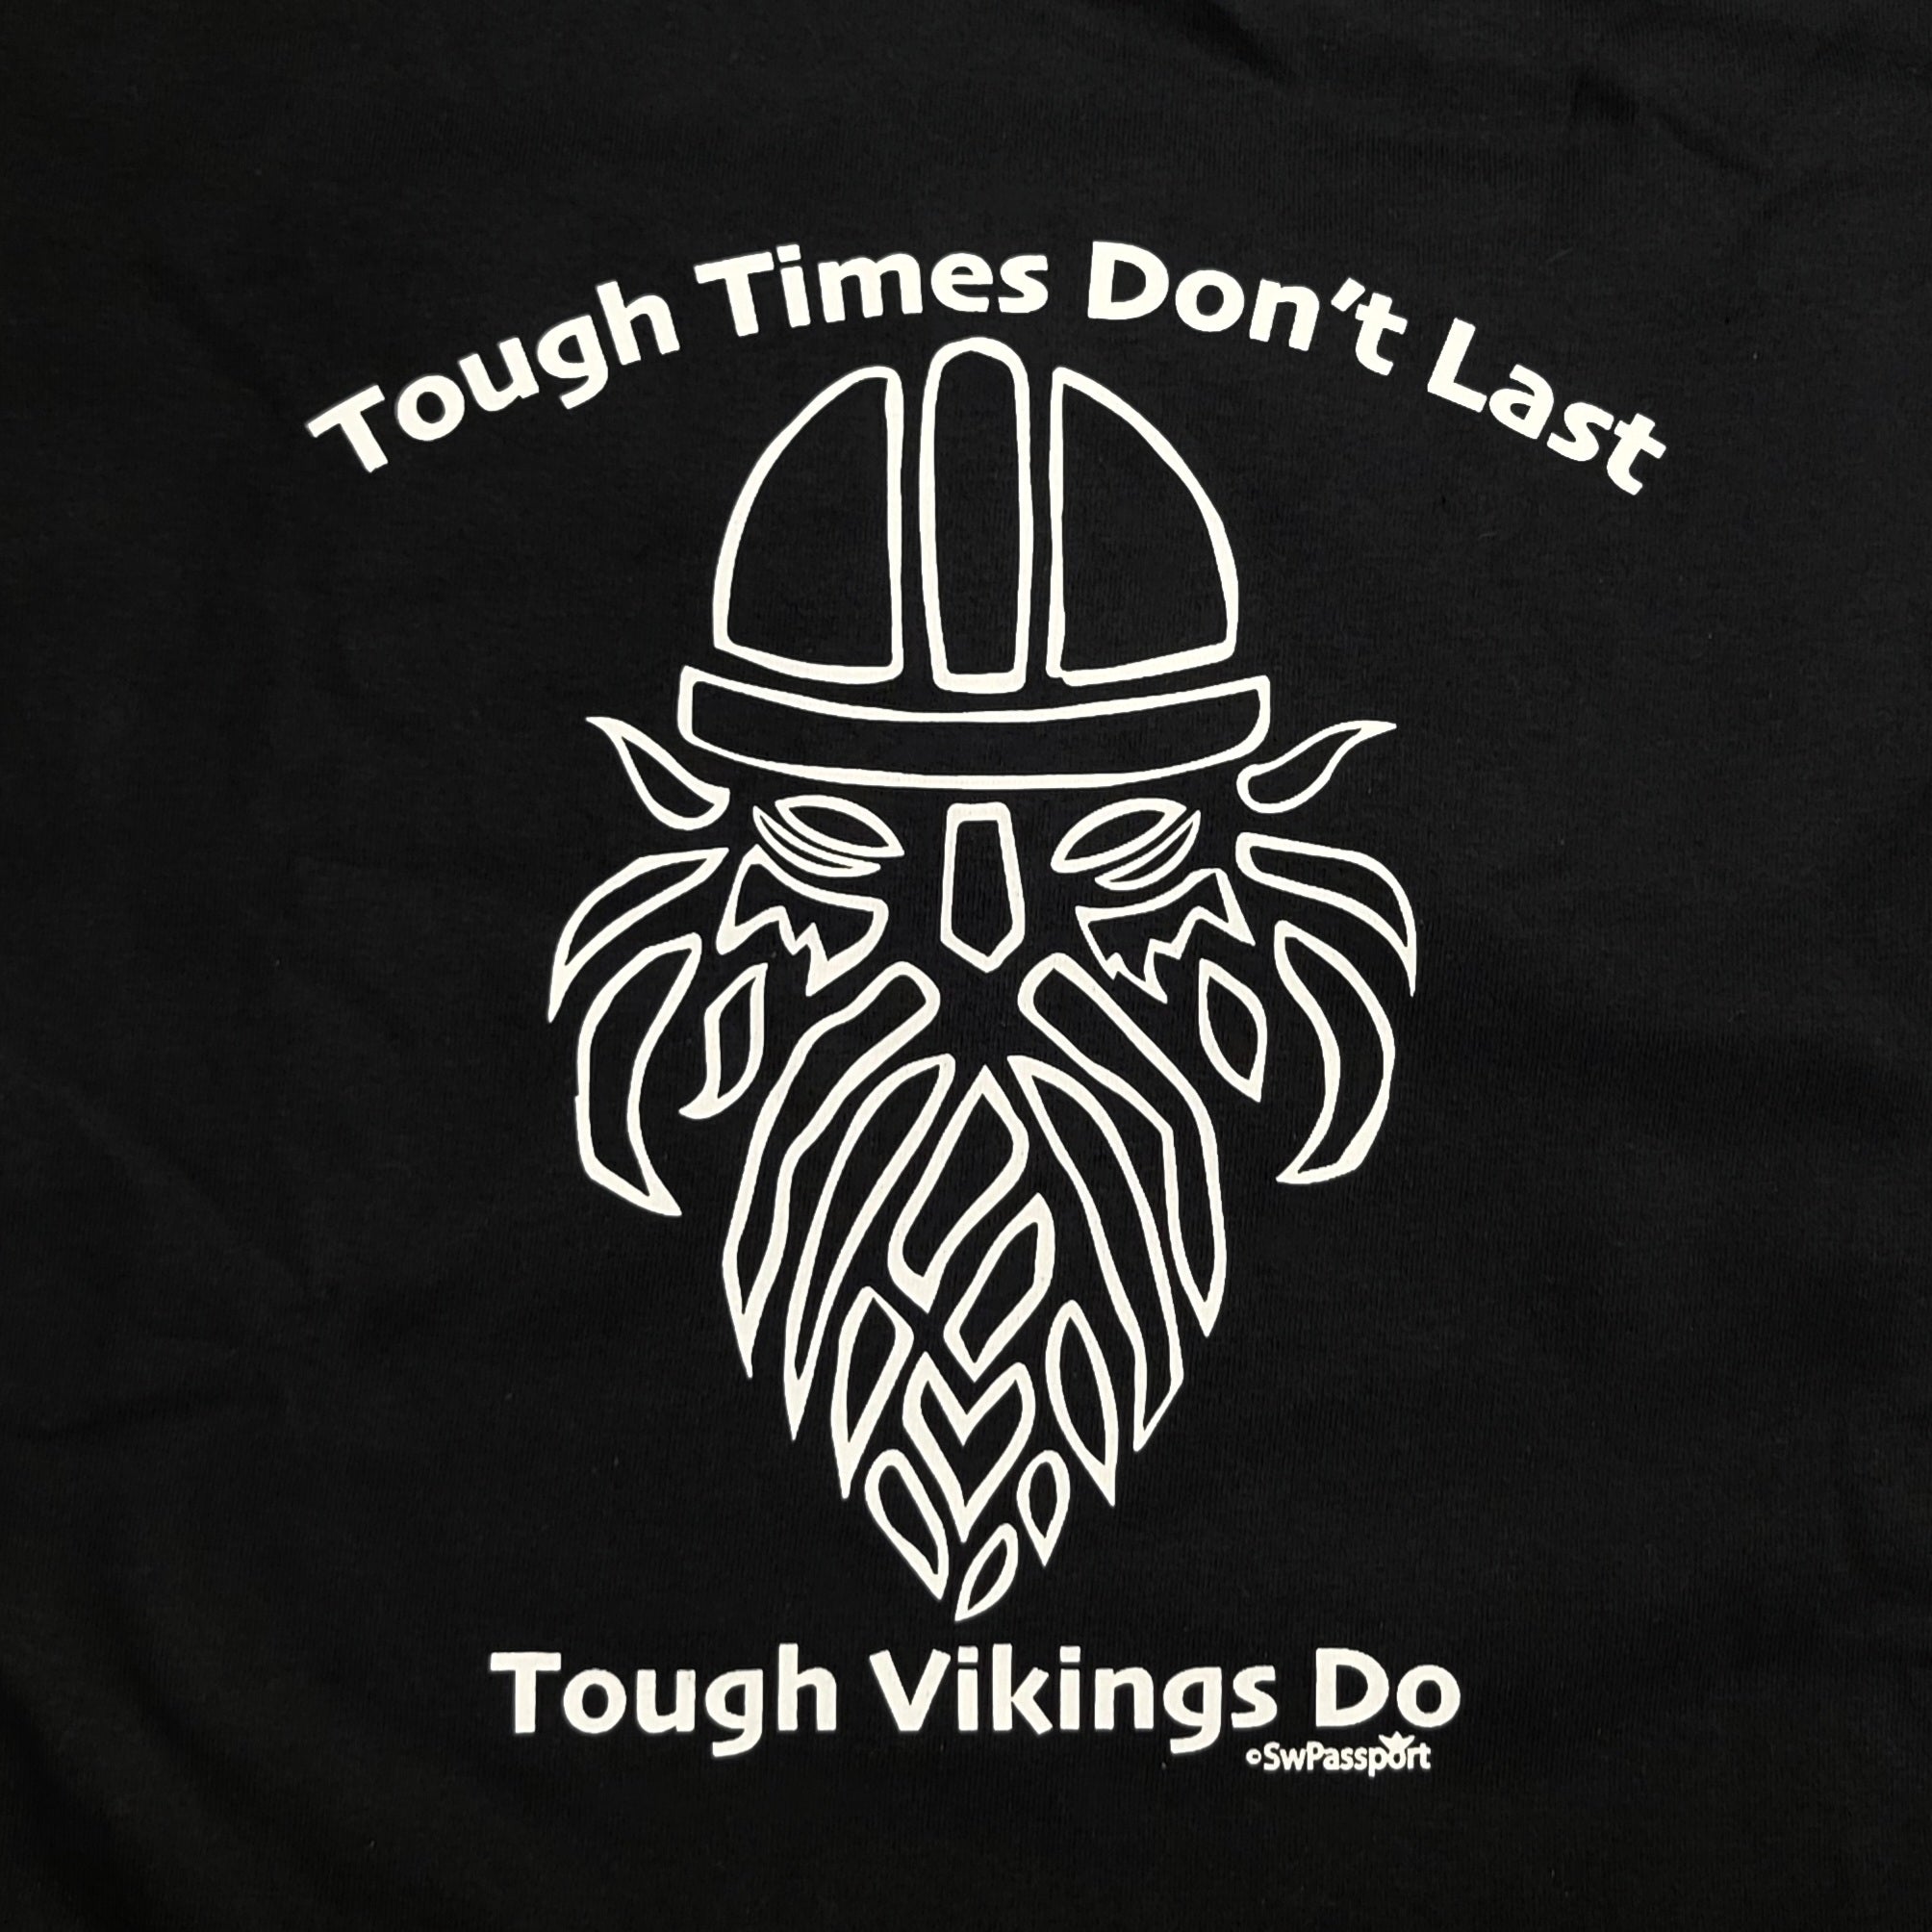 Tee: "Tough Times Don't Last, Tough Vikings Do"